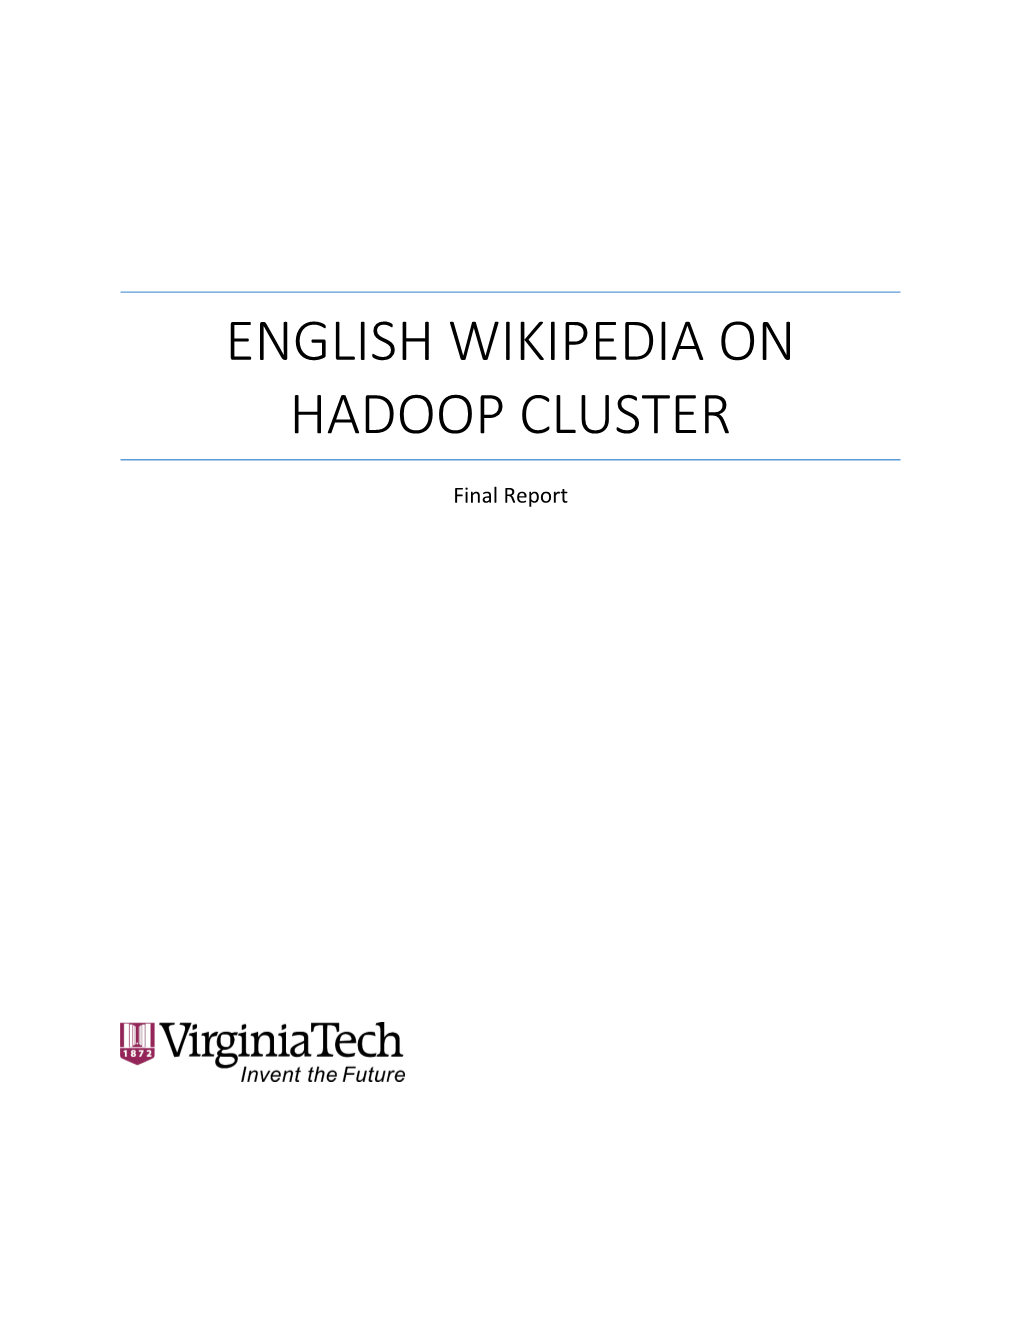 English Wikipedia on Hadoop Cluster